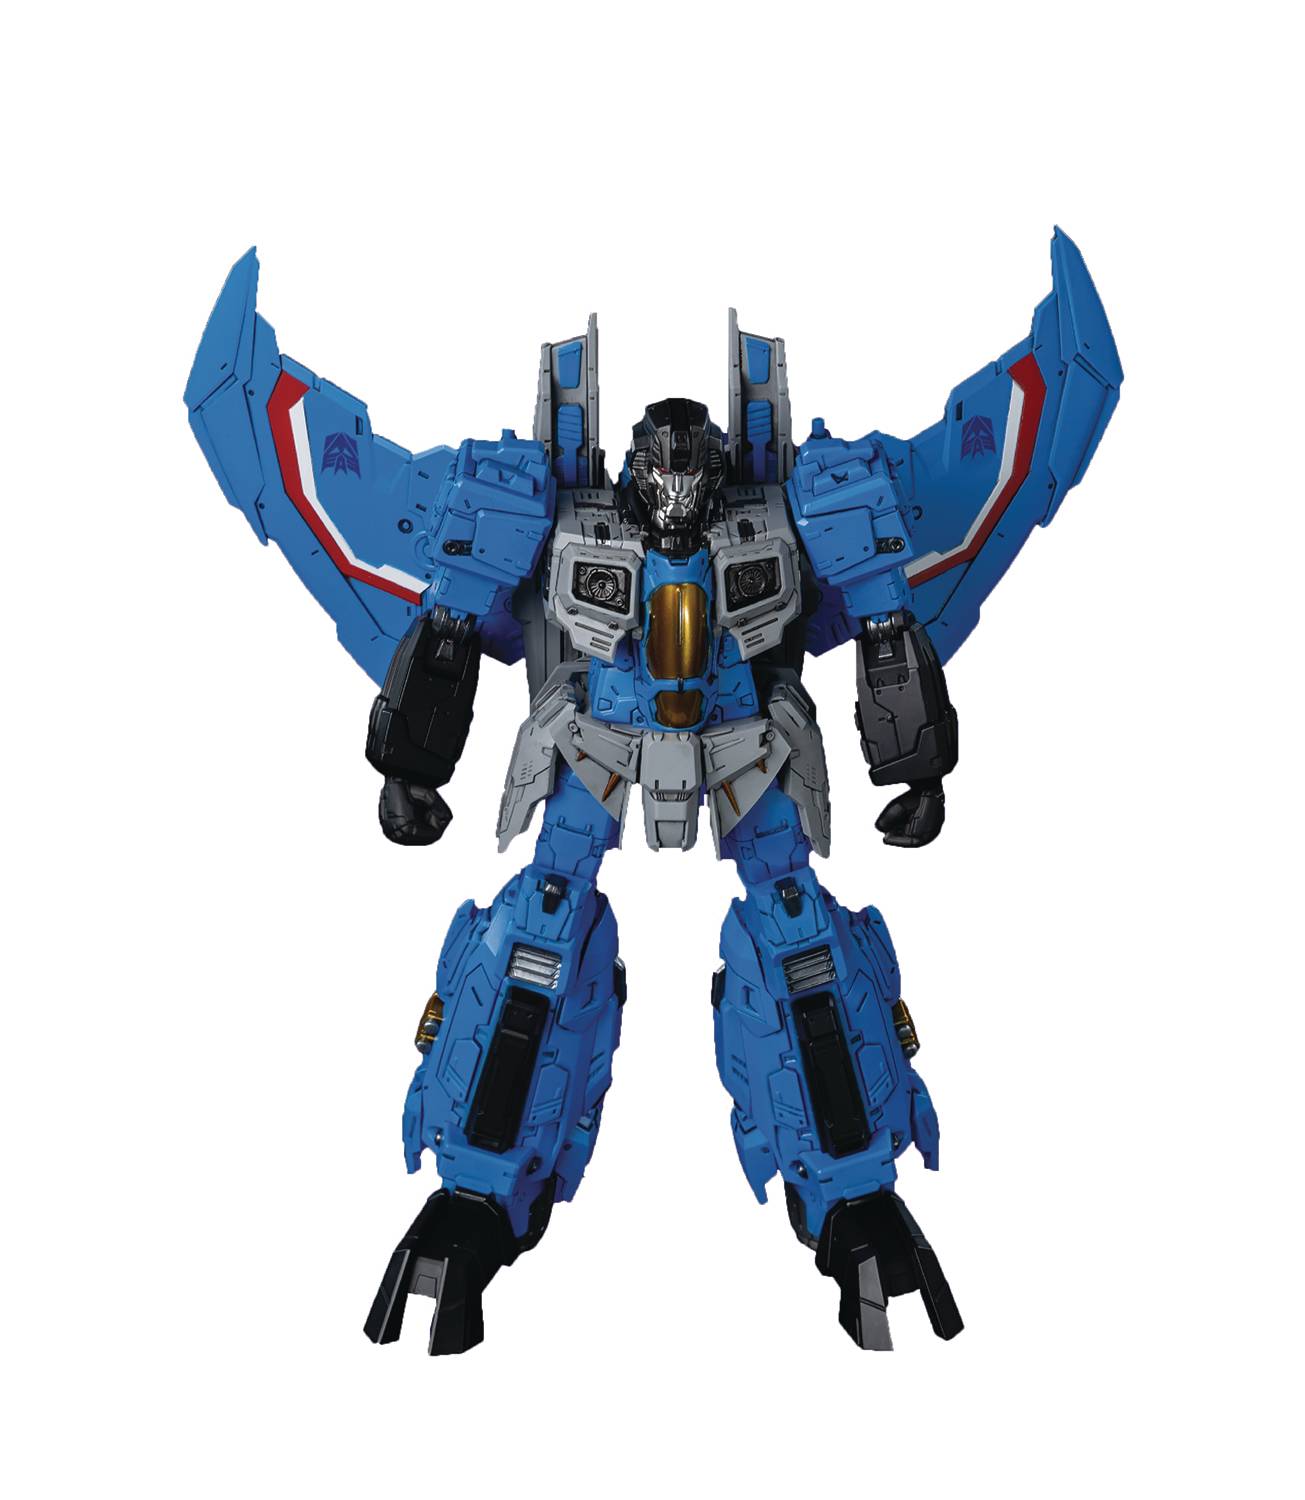 Thundercracker Transformers Threezero DLX Action Figure Pre-order